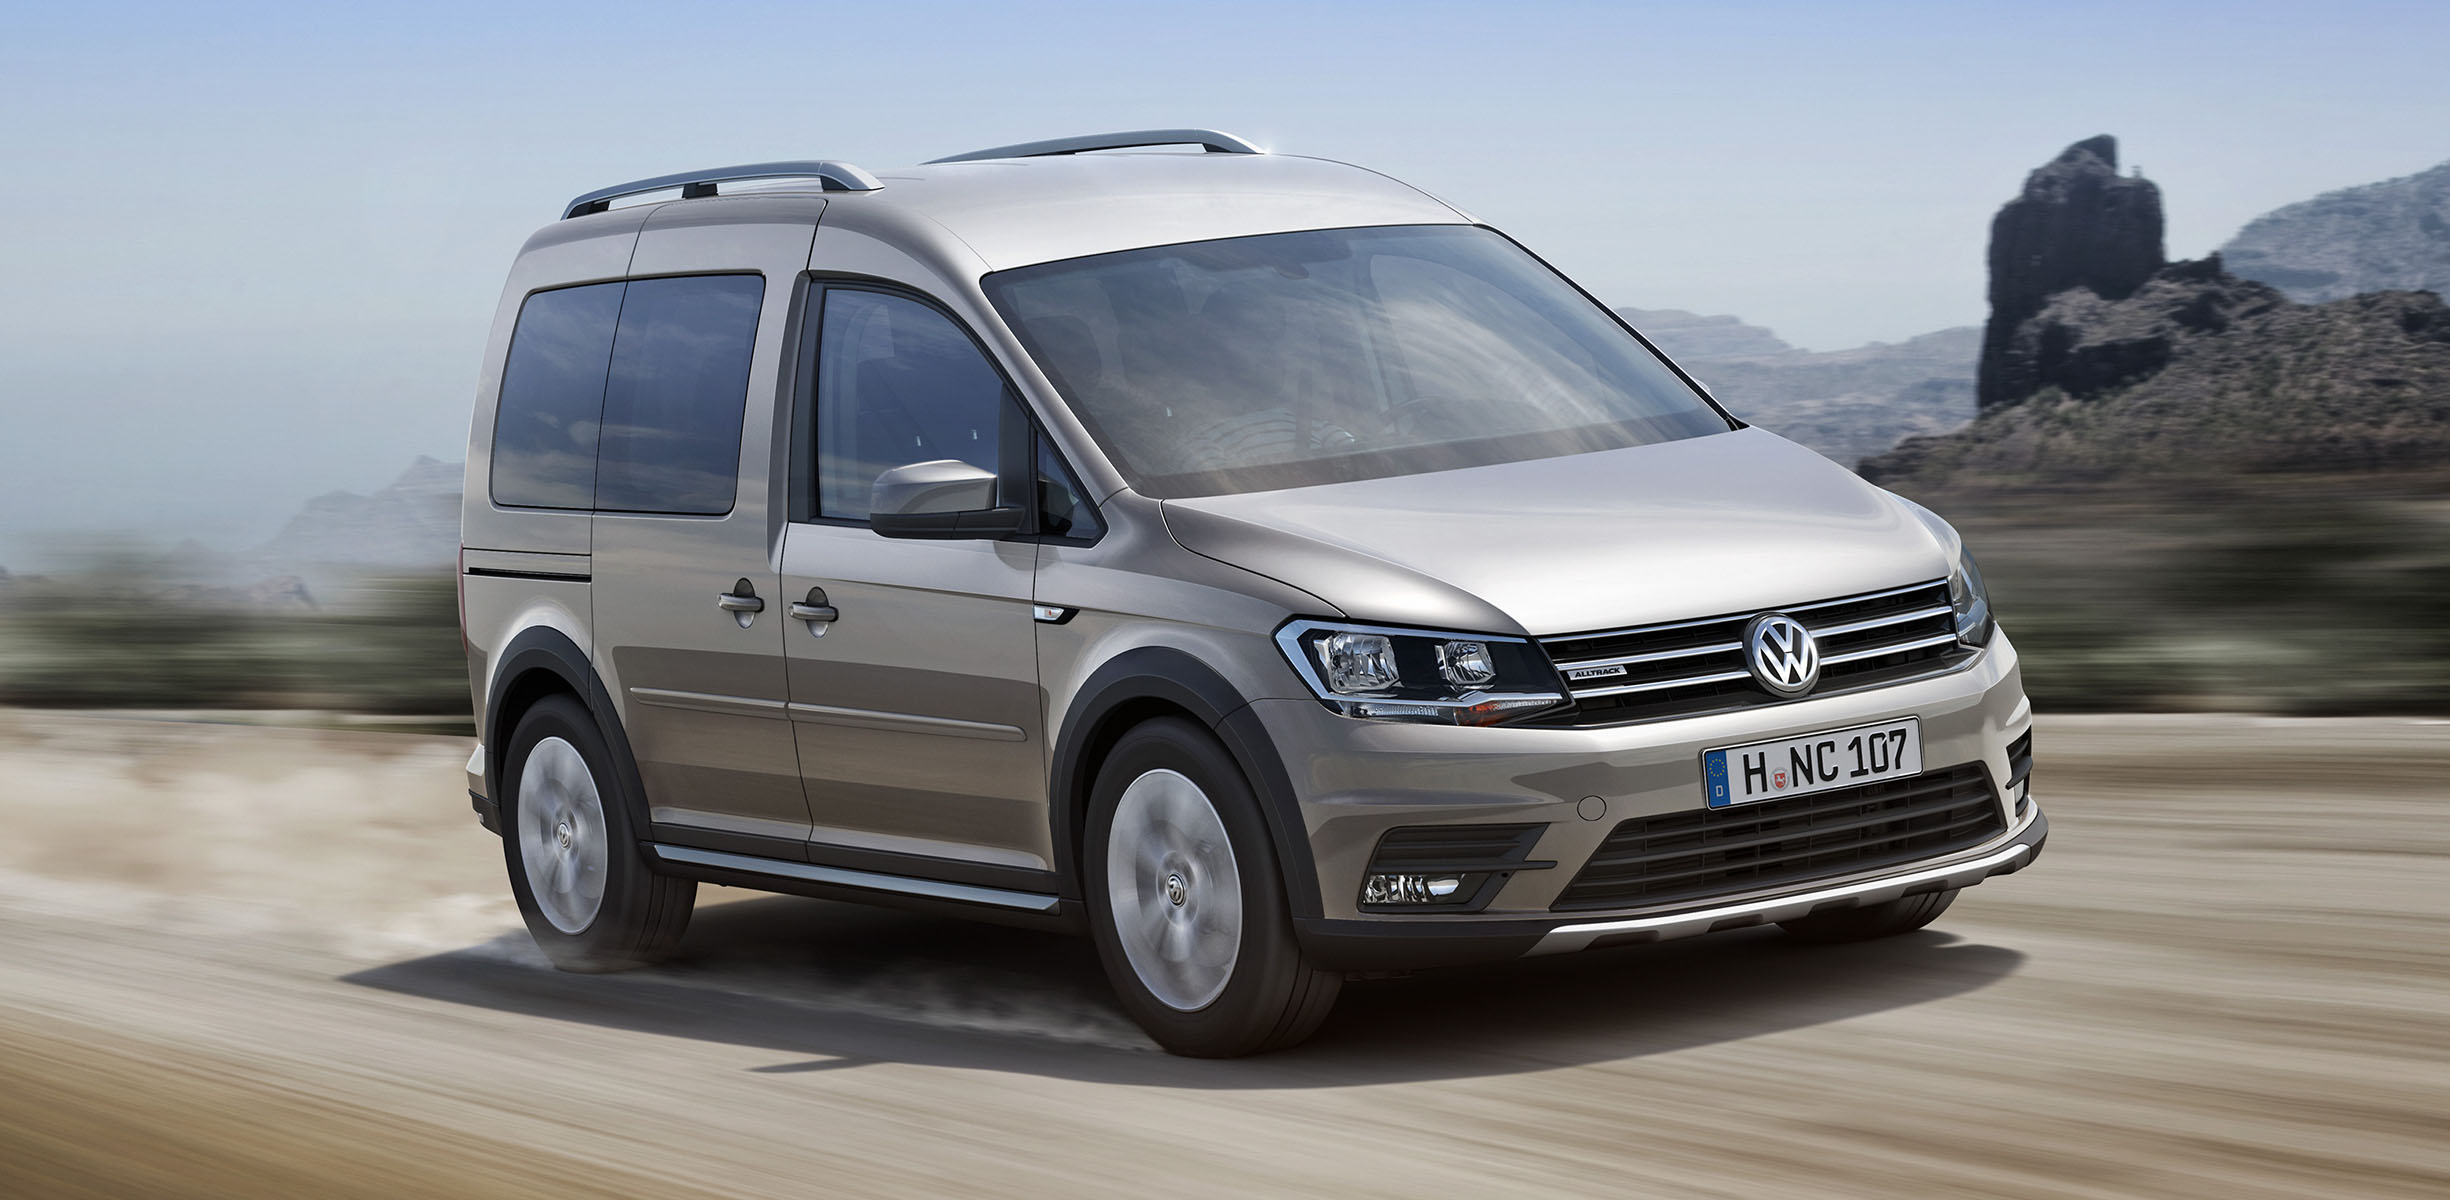 Volkswagen Caddy Alltrack revealed - Photos (1 of 3)